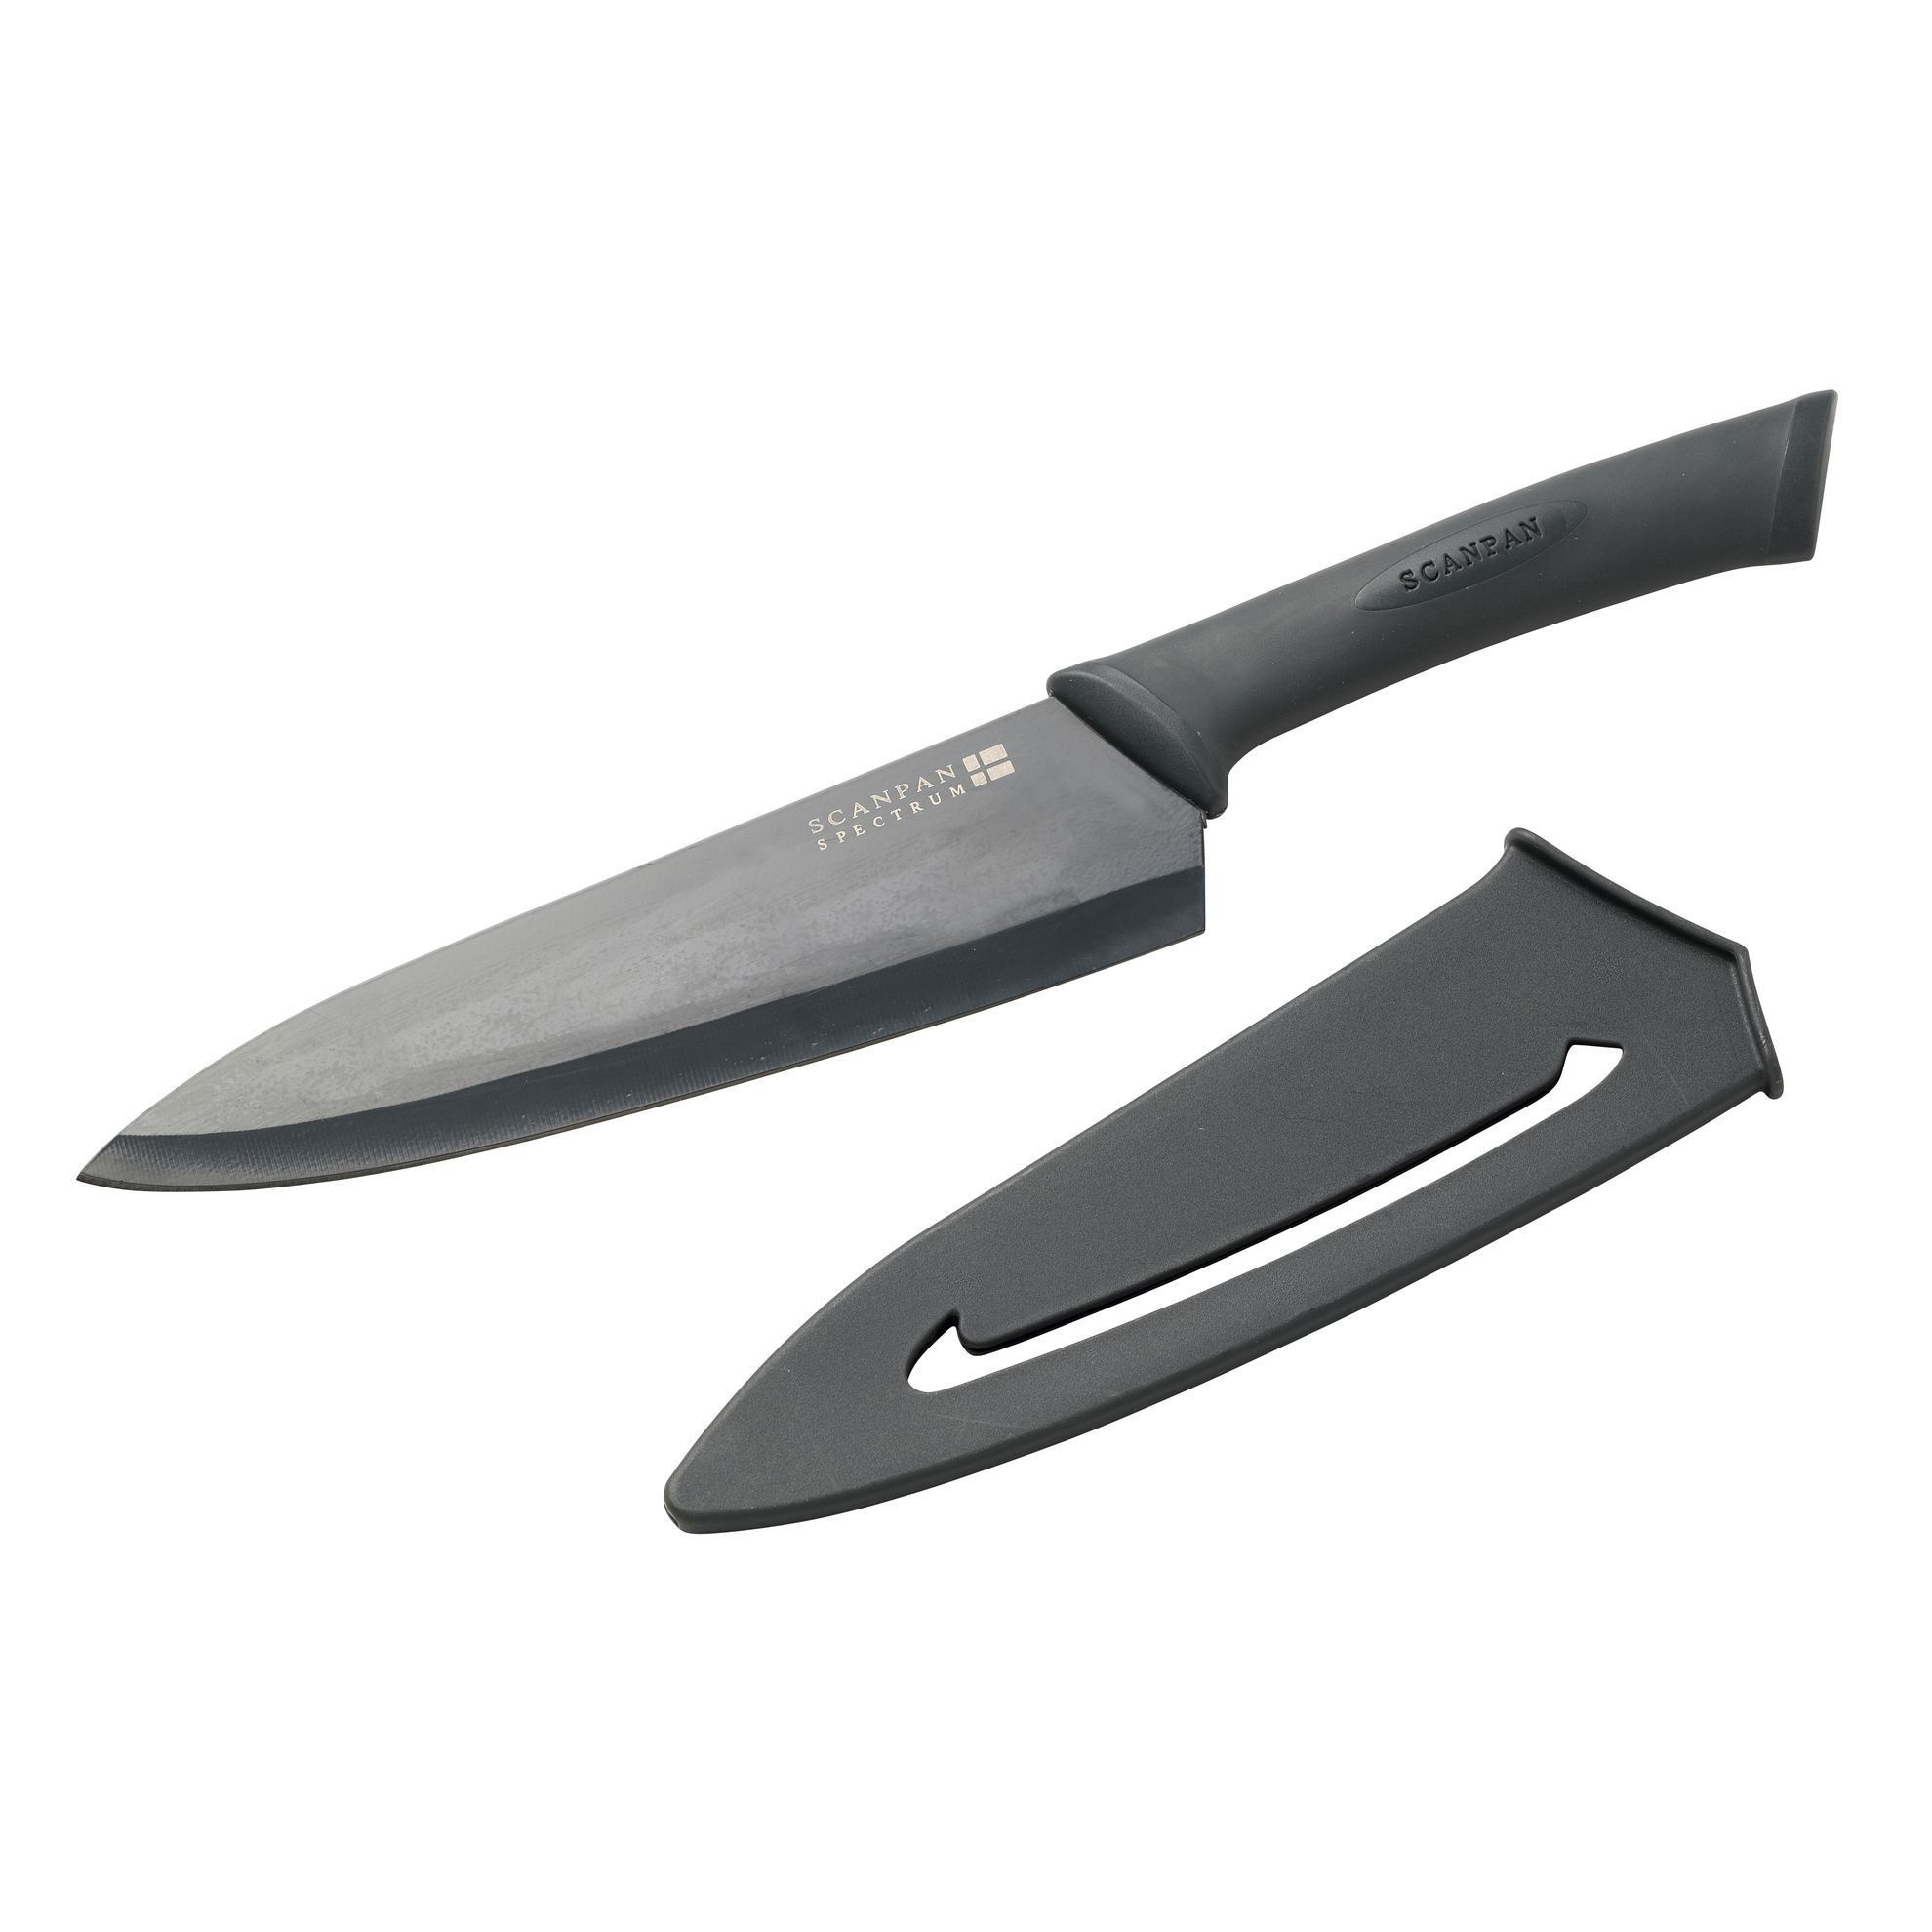 Нож Scanpan. Orion нож повара 18.5см.. Сканпан ножи для кухни дамасская. Spectrum Knifes.